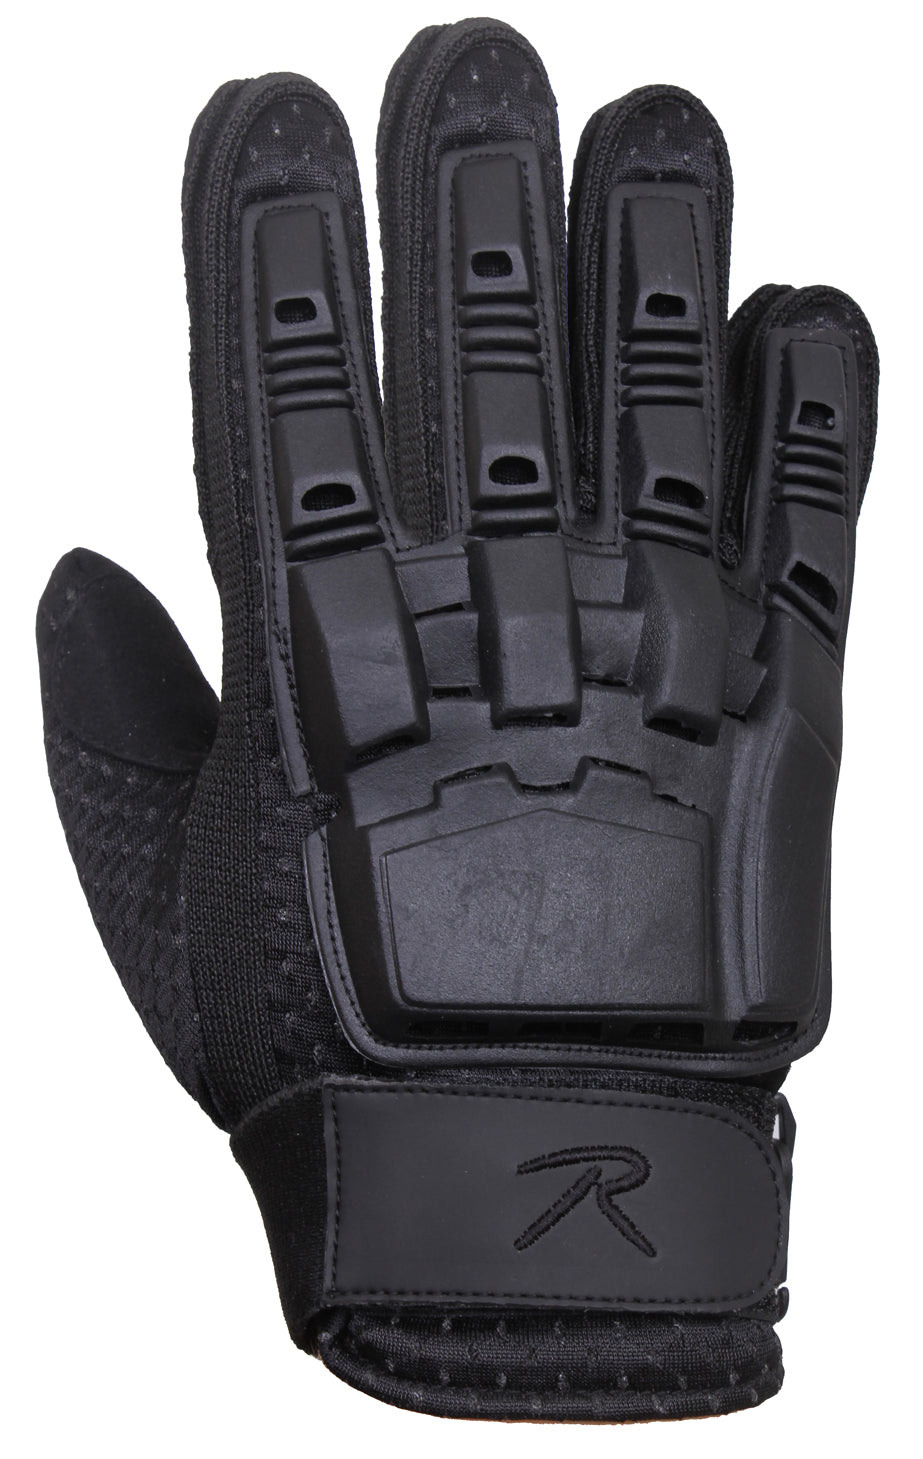 Rothco Hard Back Gloves - Tactical Choice Plus